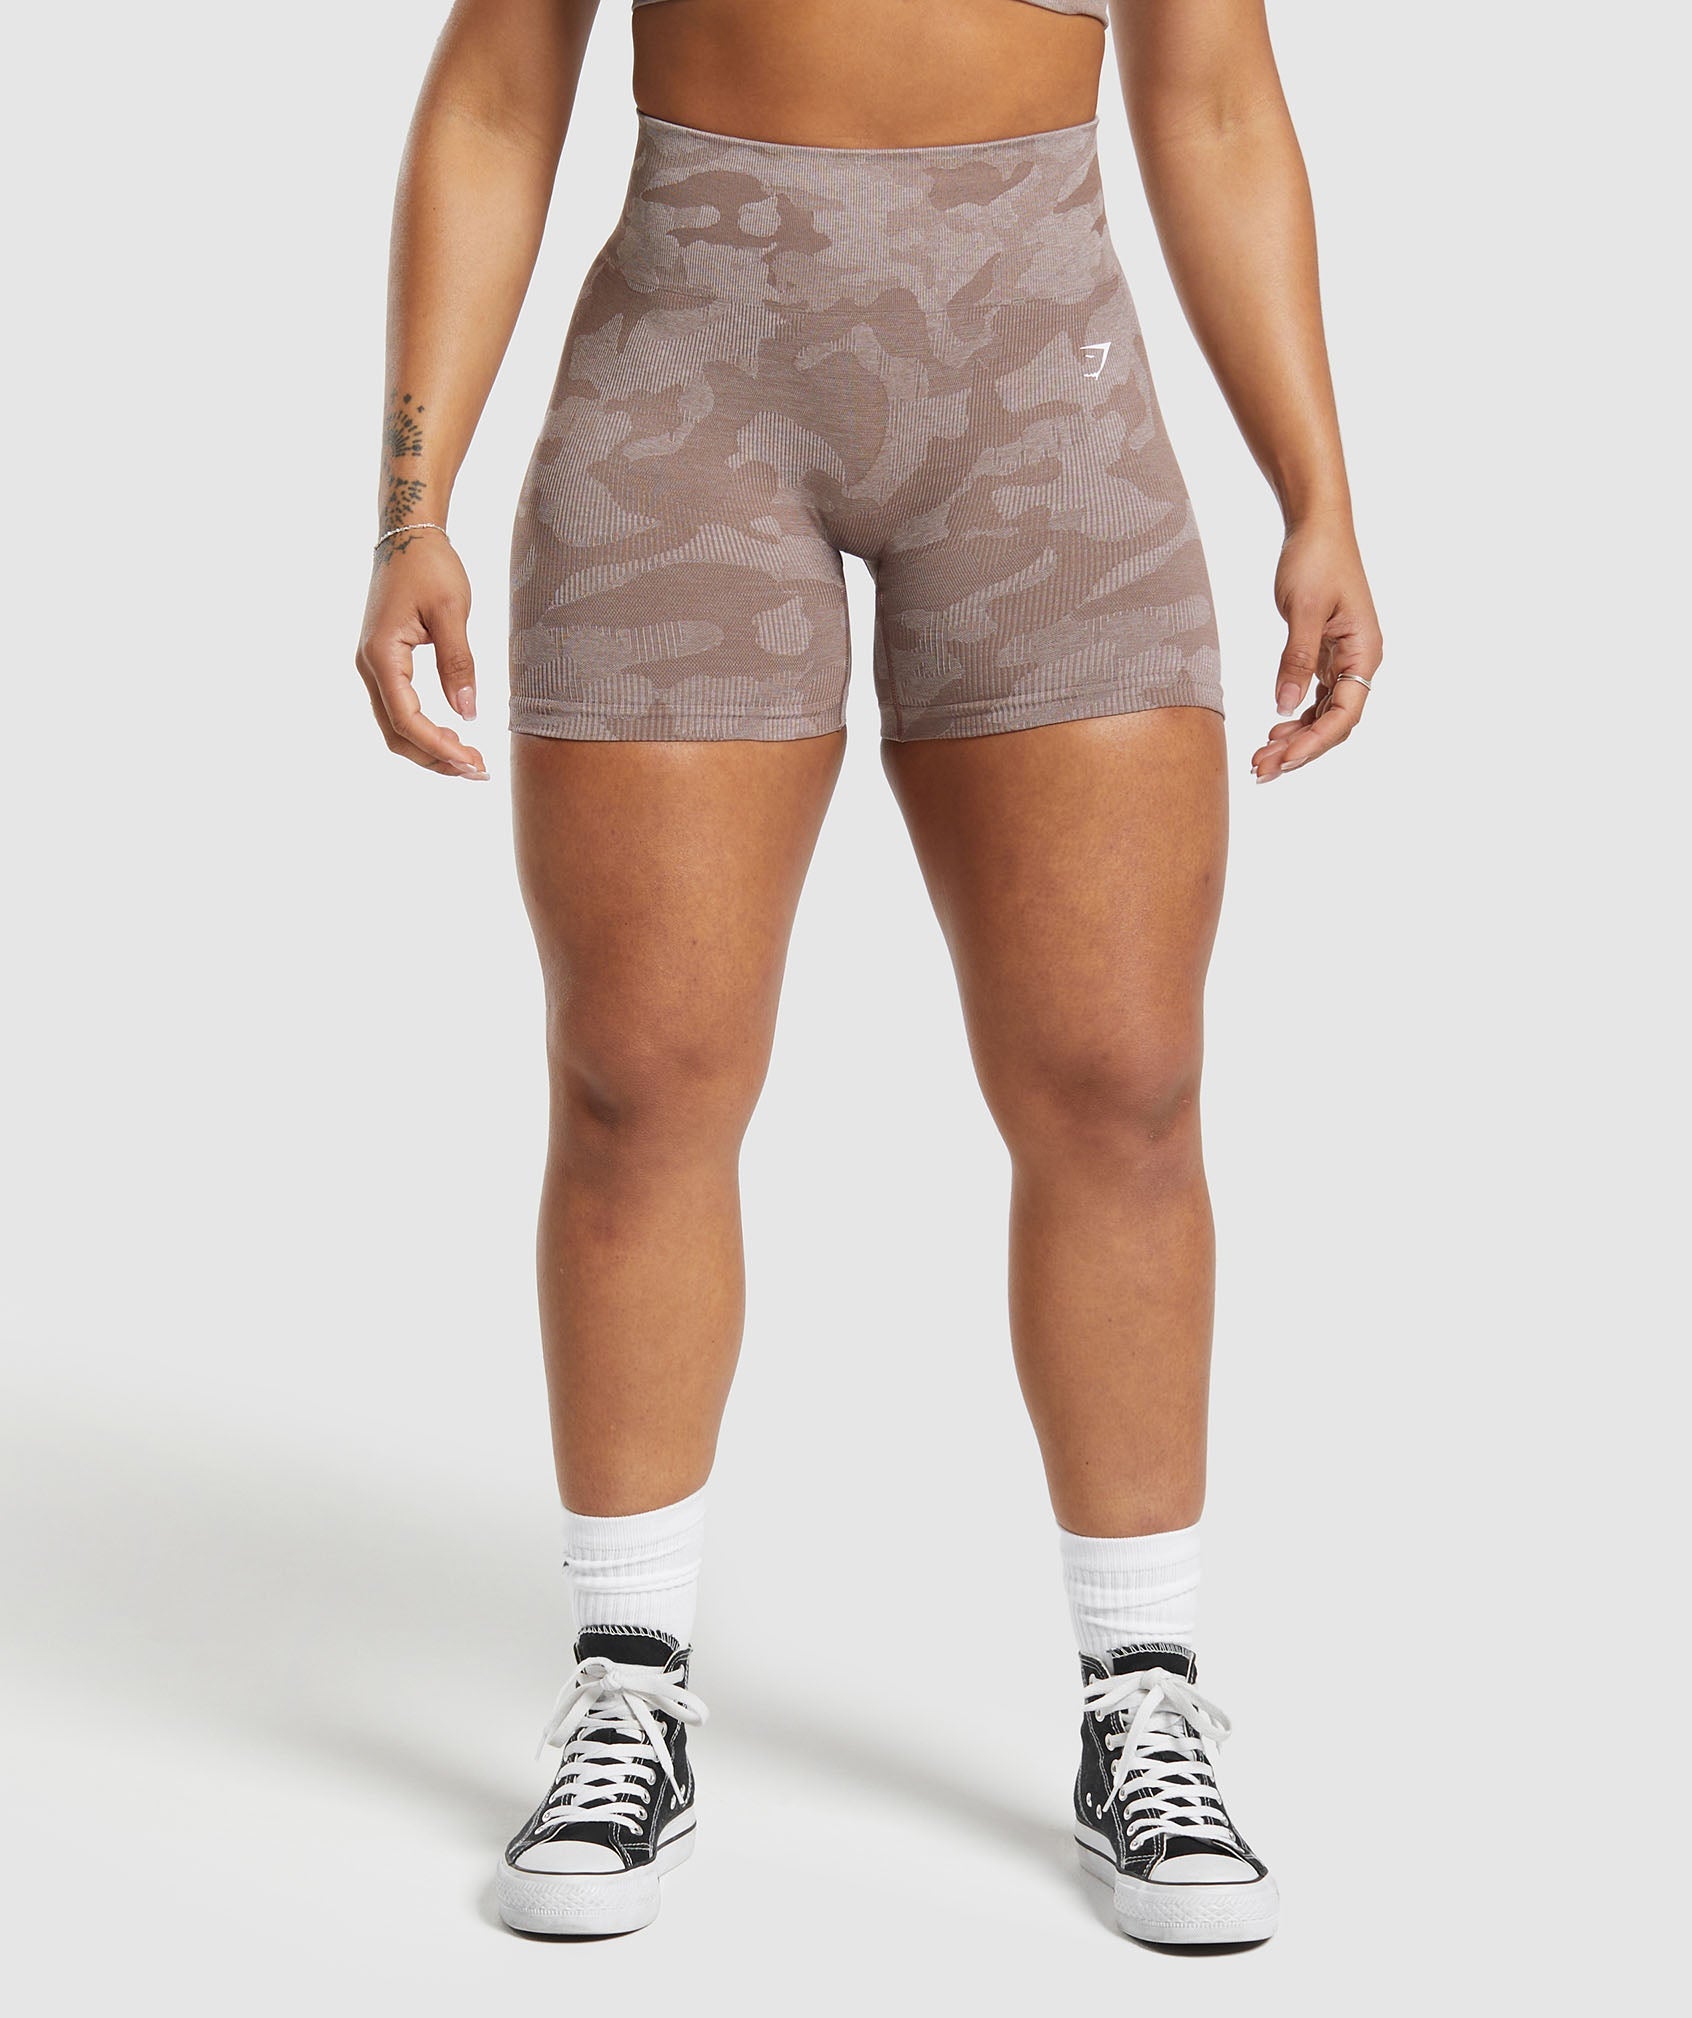 Adapt Camo Seamless Ribbed Shorts in Mocha Mauve/Stone Pink